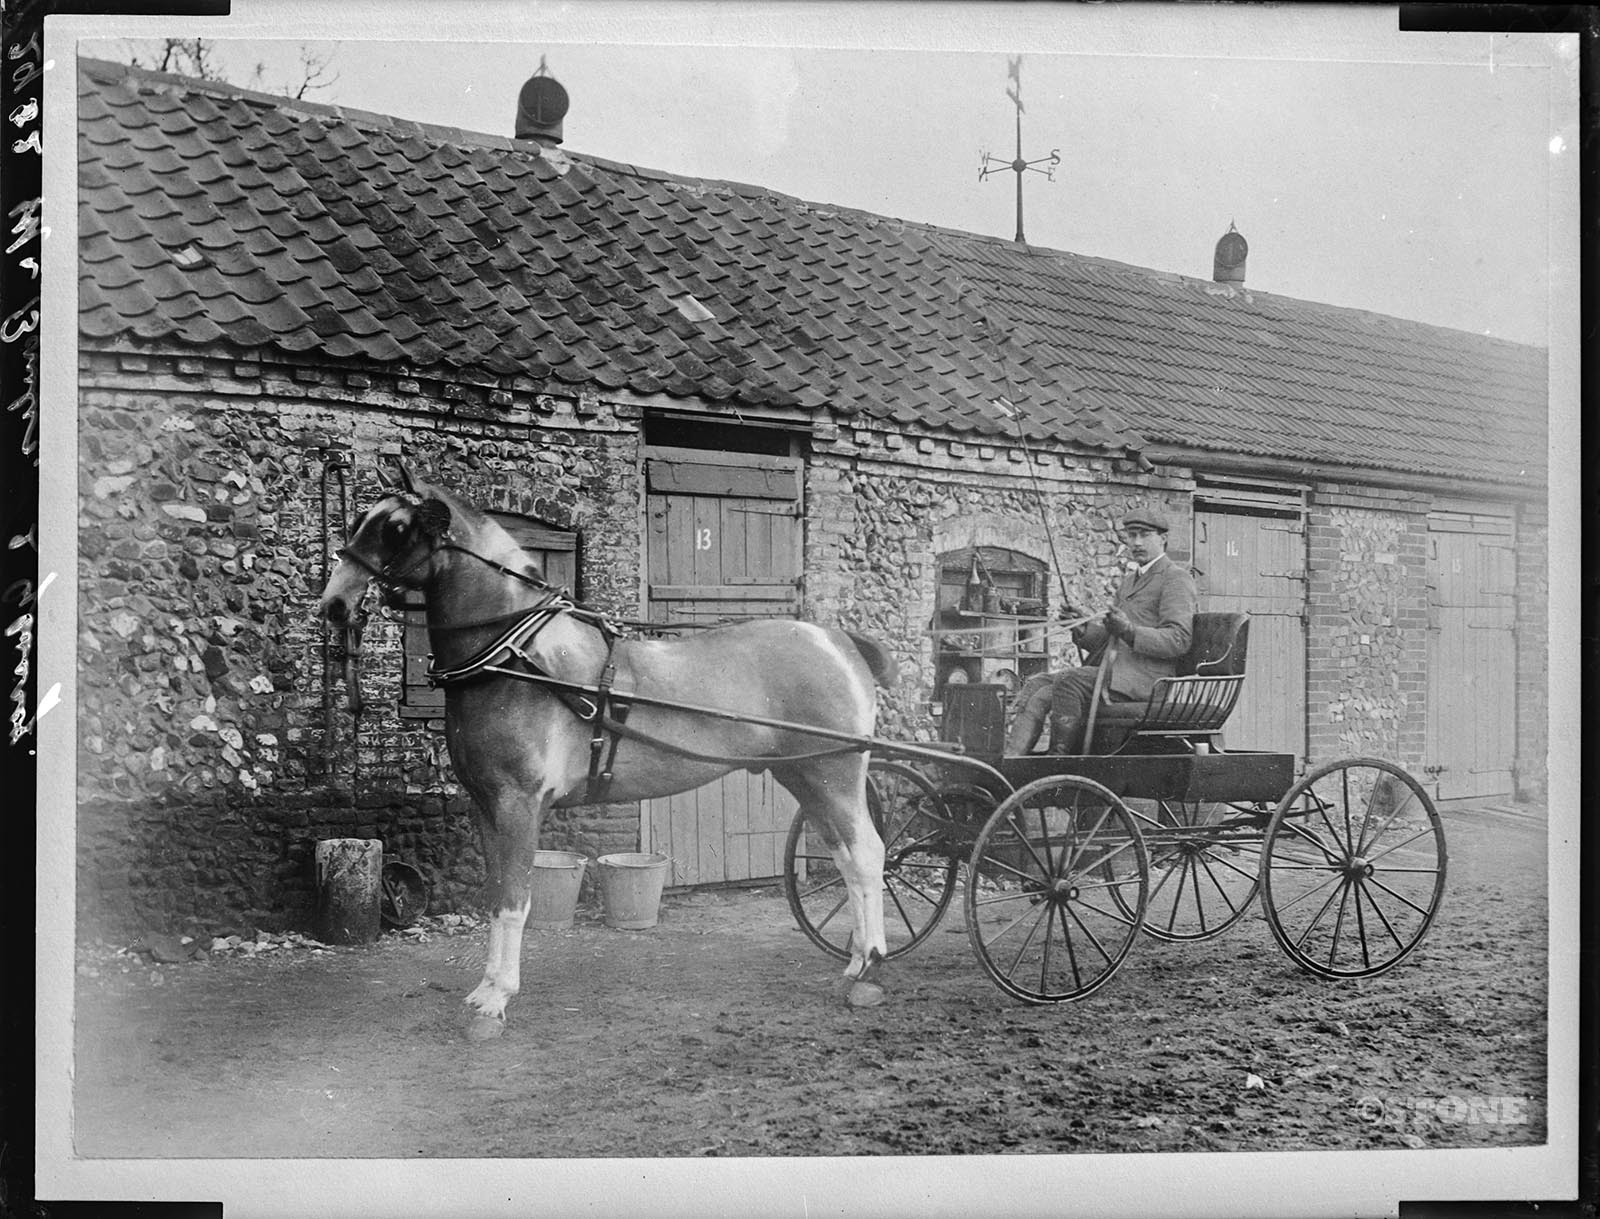 Herbert Thomas Cave - Horse and cart